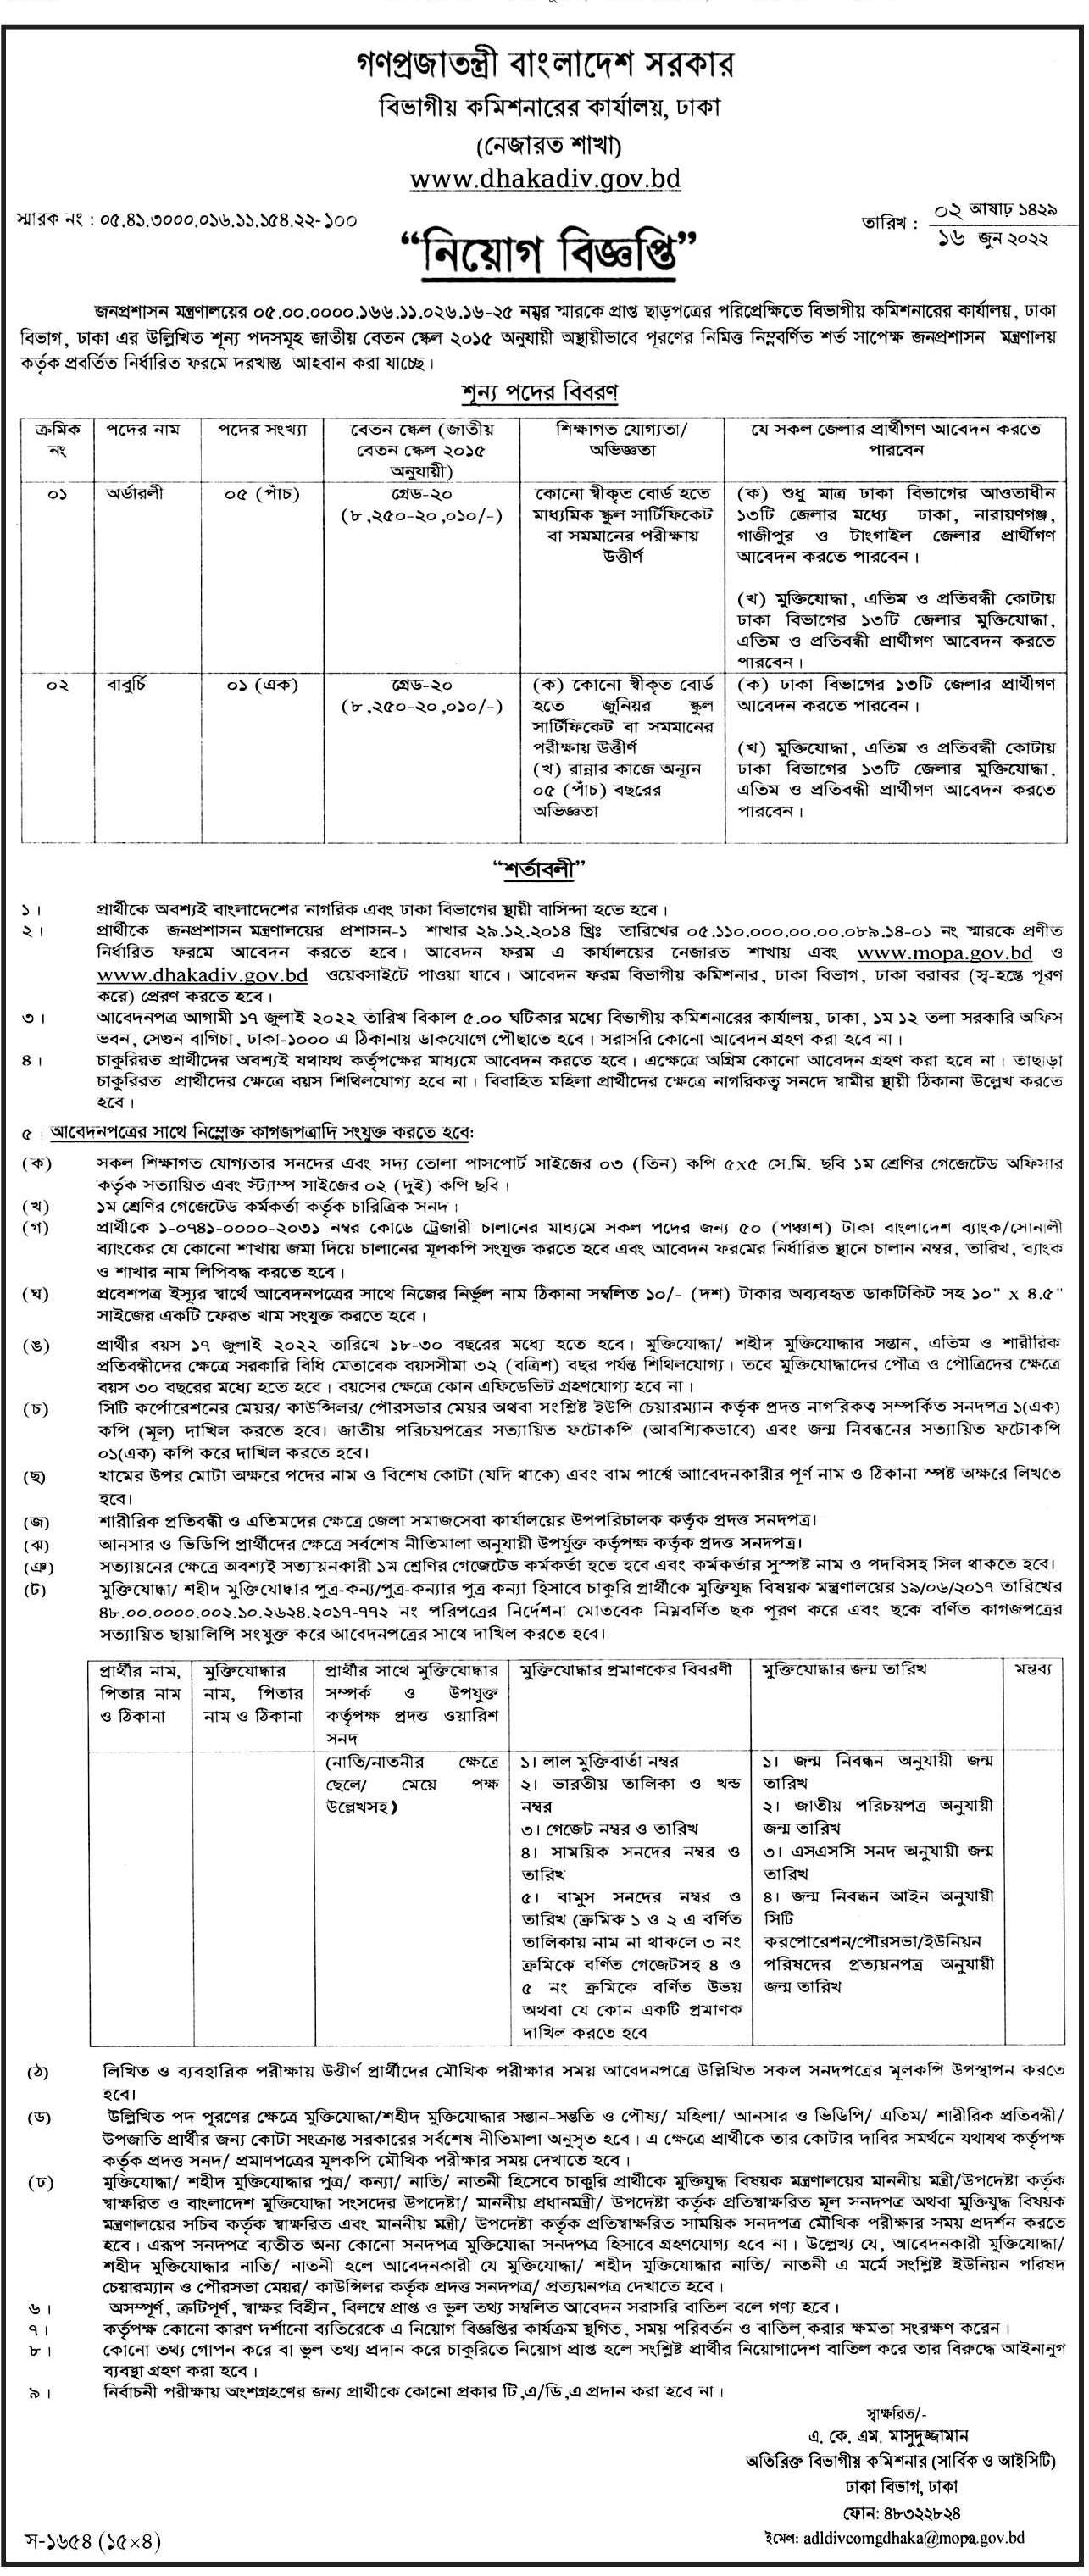 Divisional Commissioner Office, Dhaka Job Circular 2022